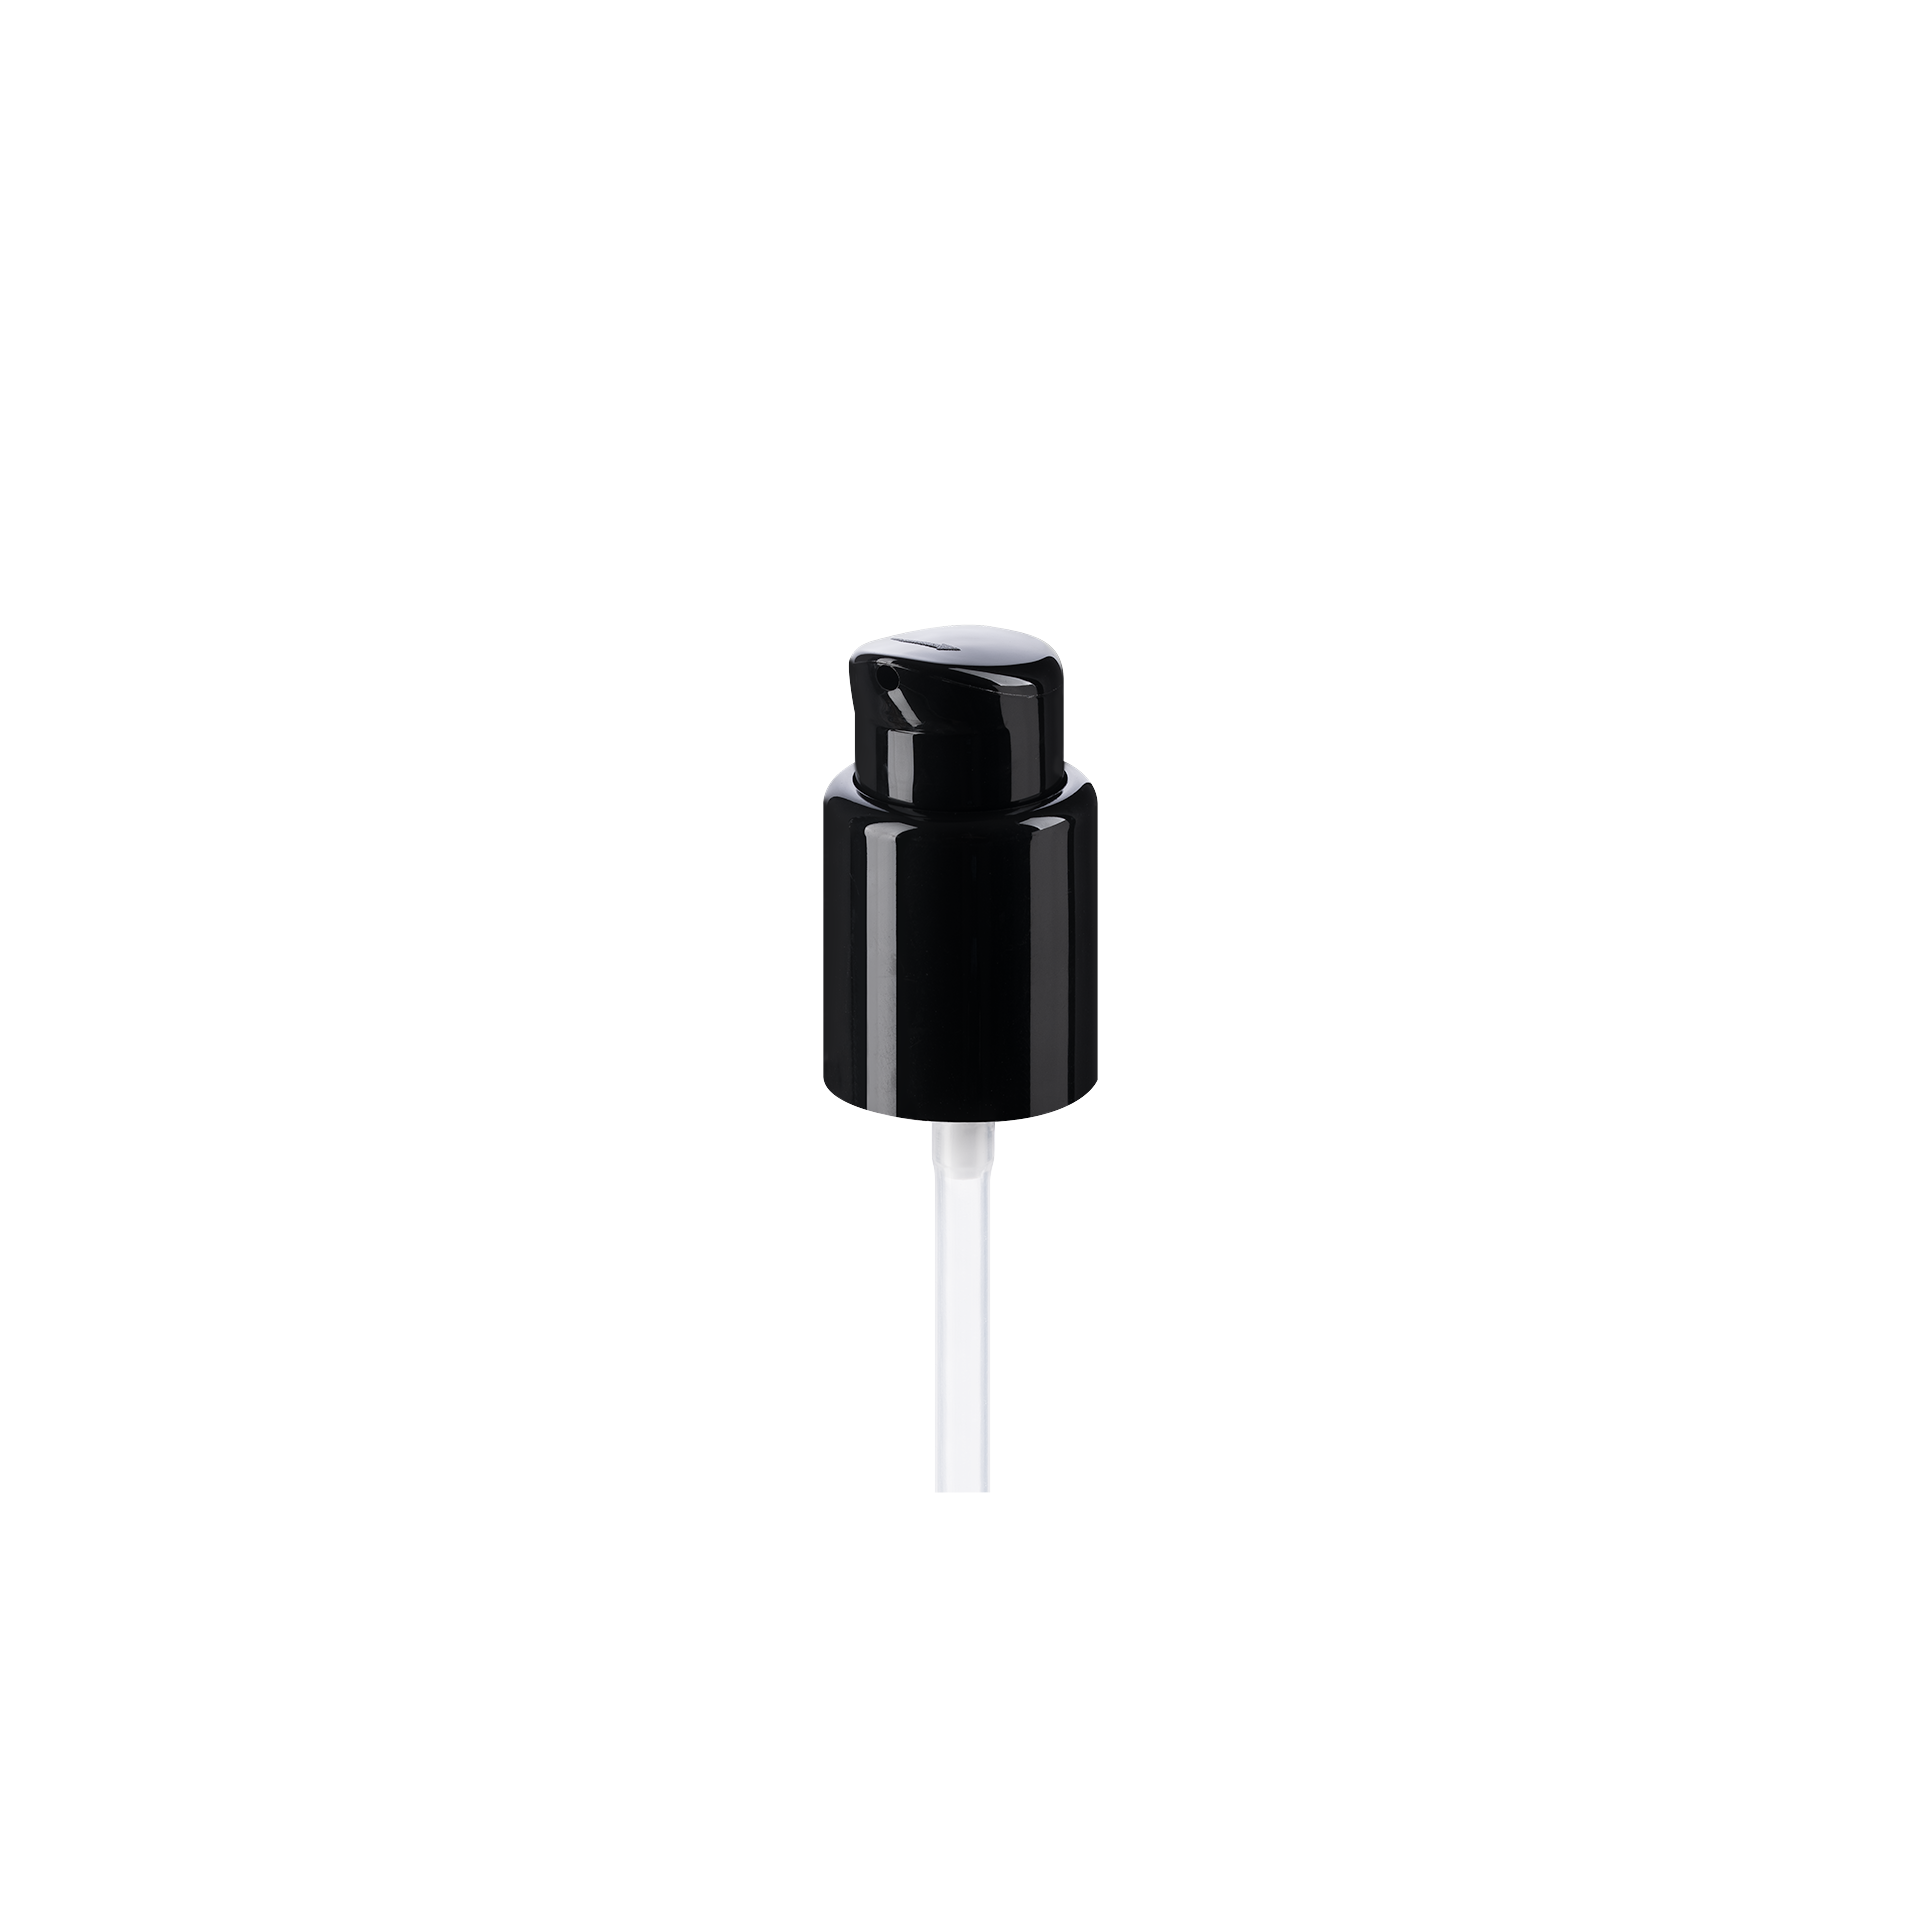 Lotion pump Metropolitan 18/415, PP, black, dose 0.15ml, black security clip (Victor 30)